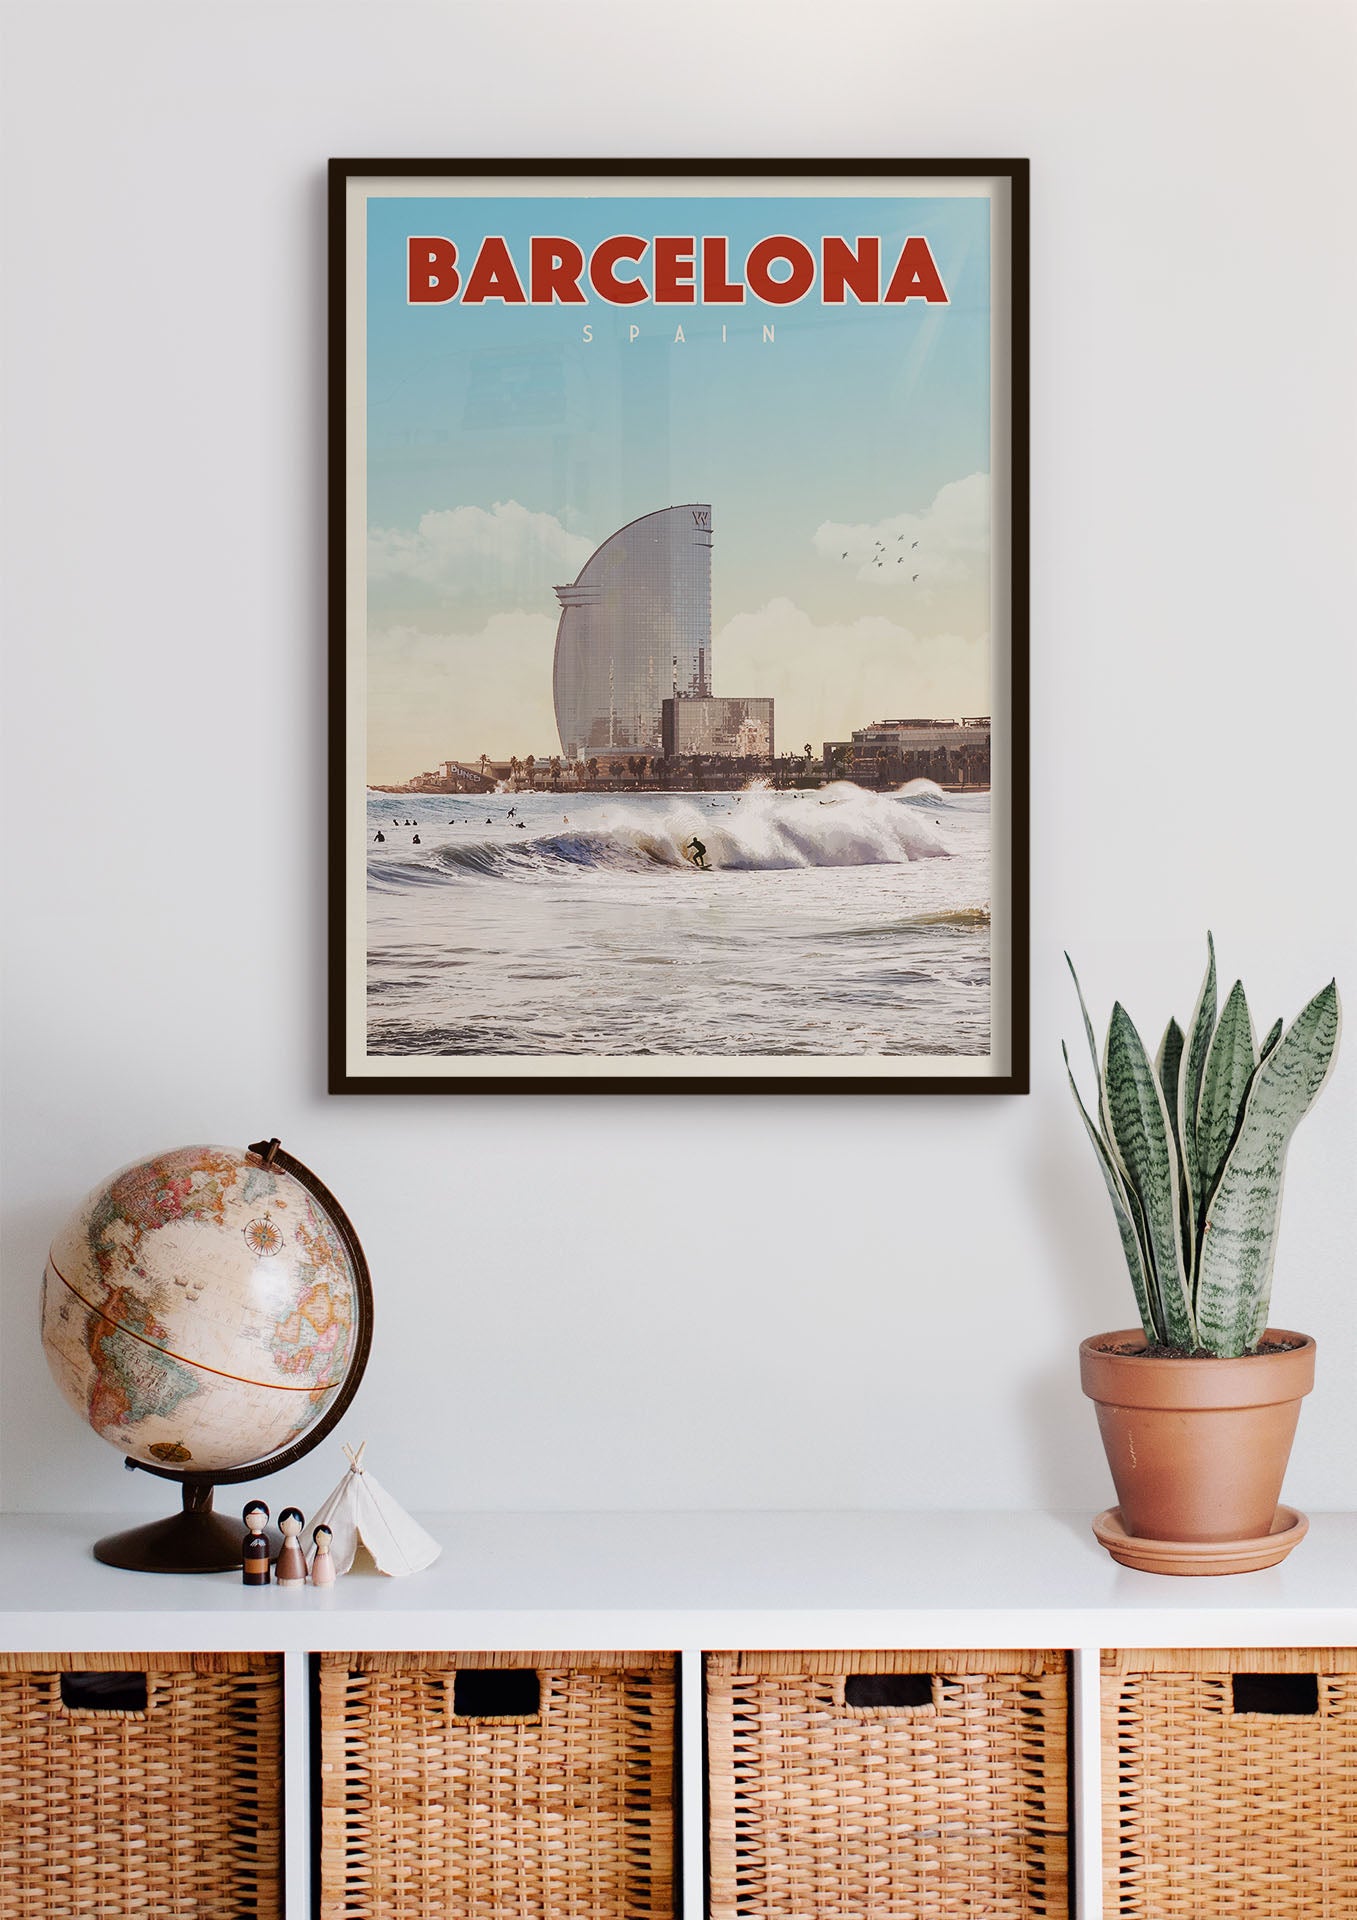 Barcelona, Spain - Vintage Travel Print